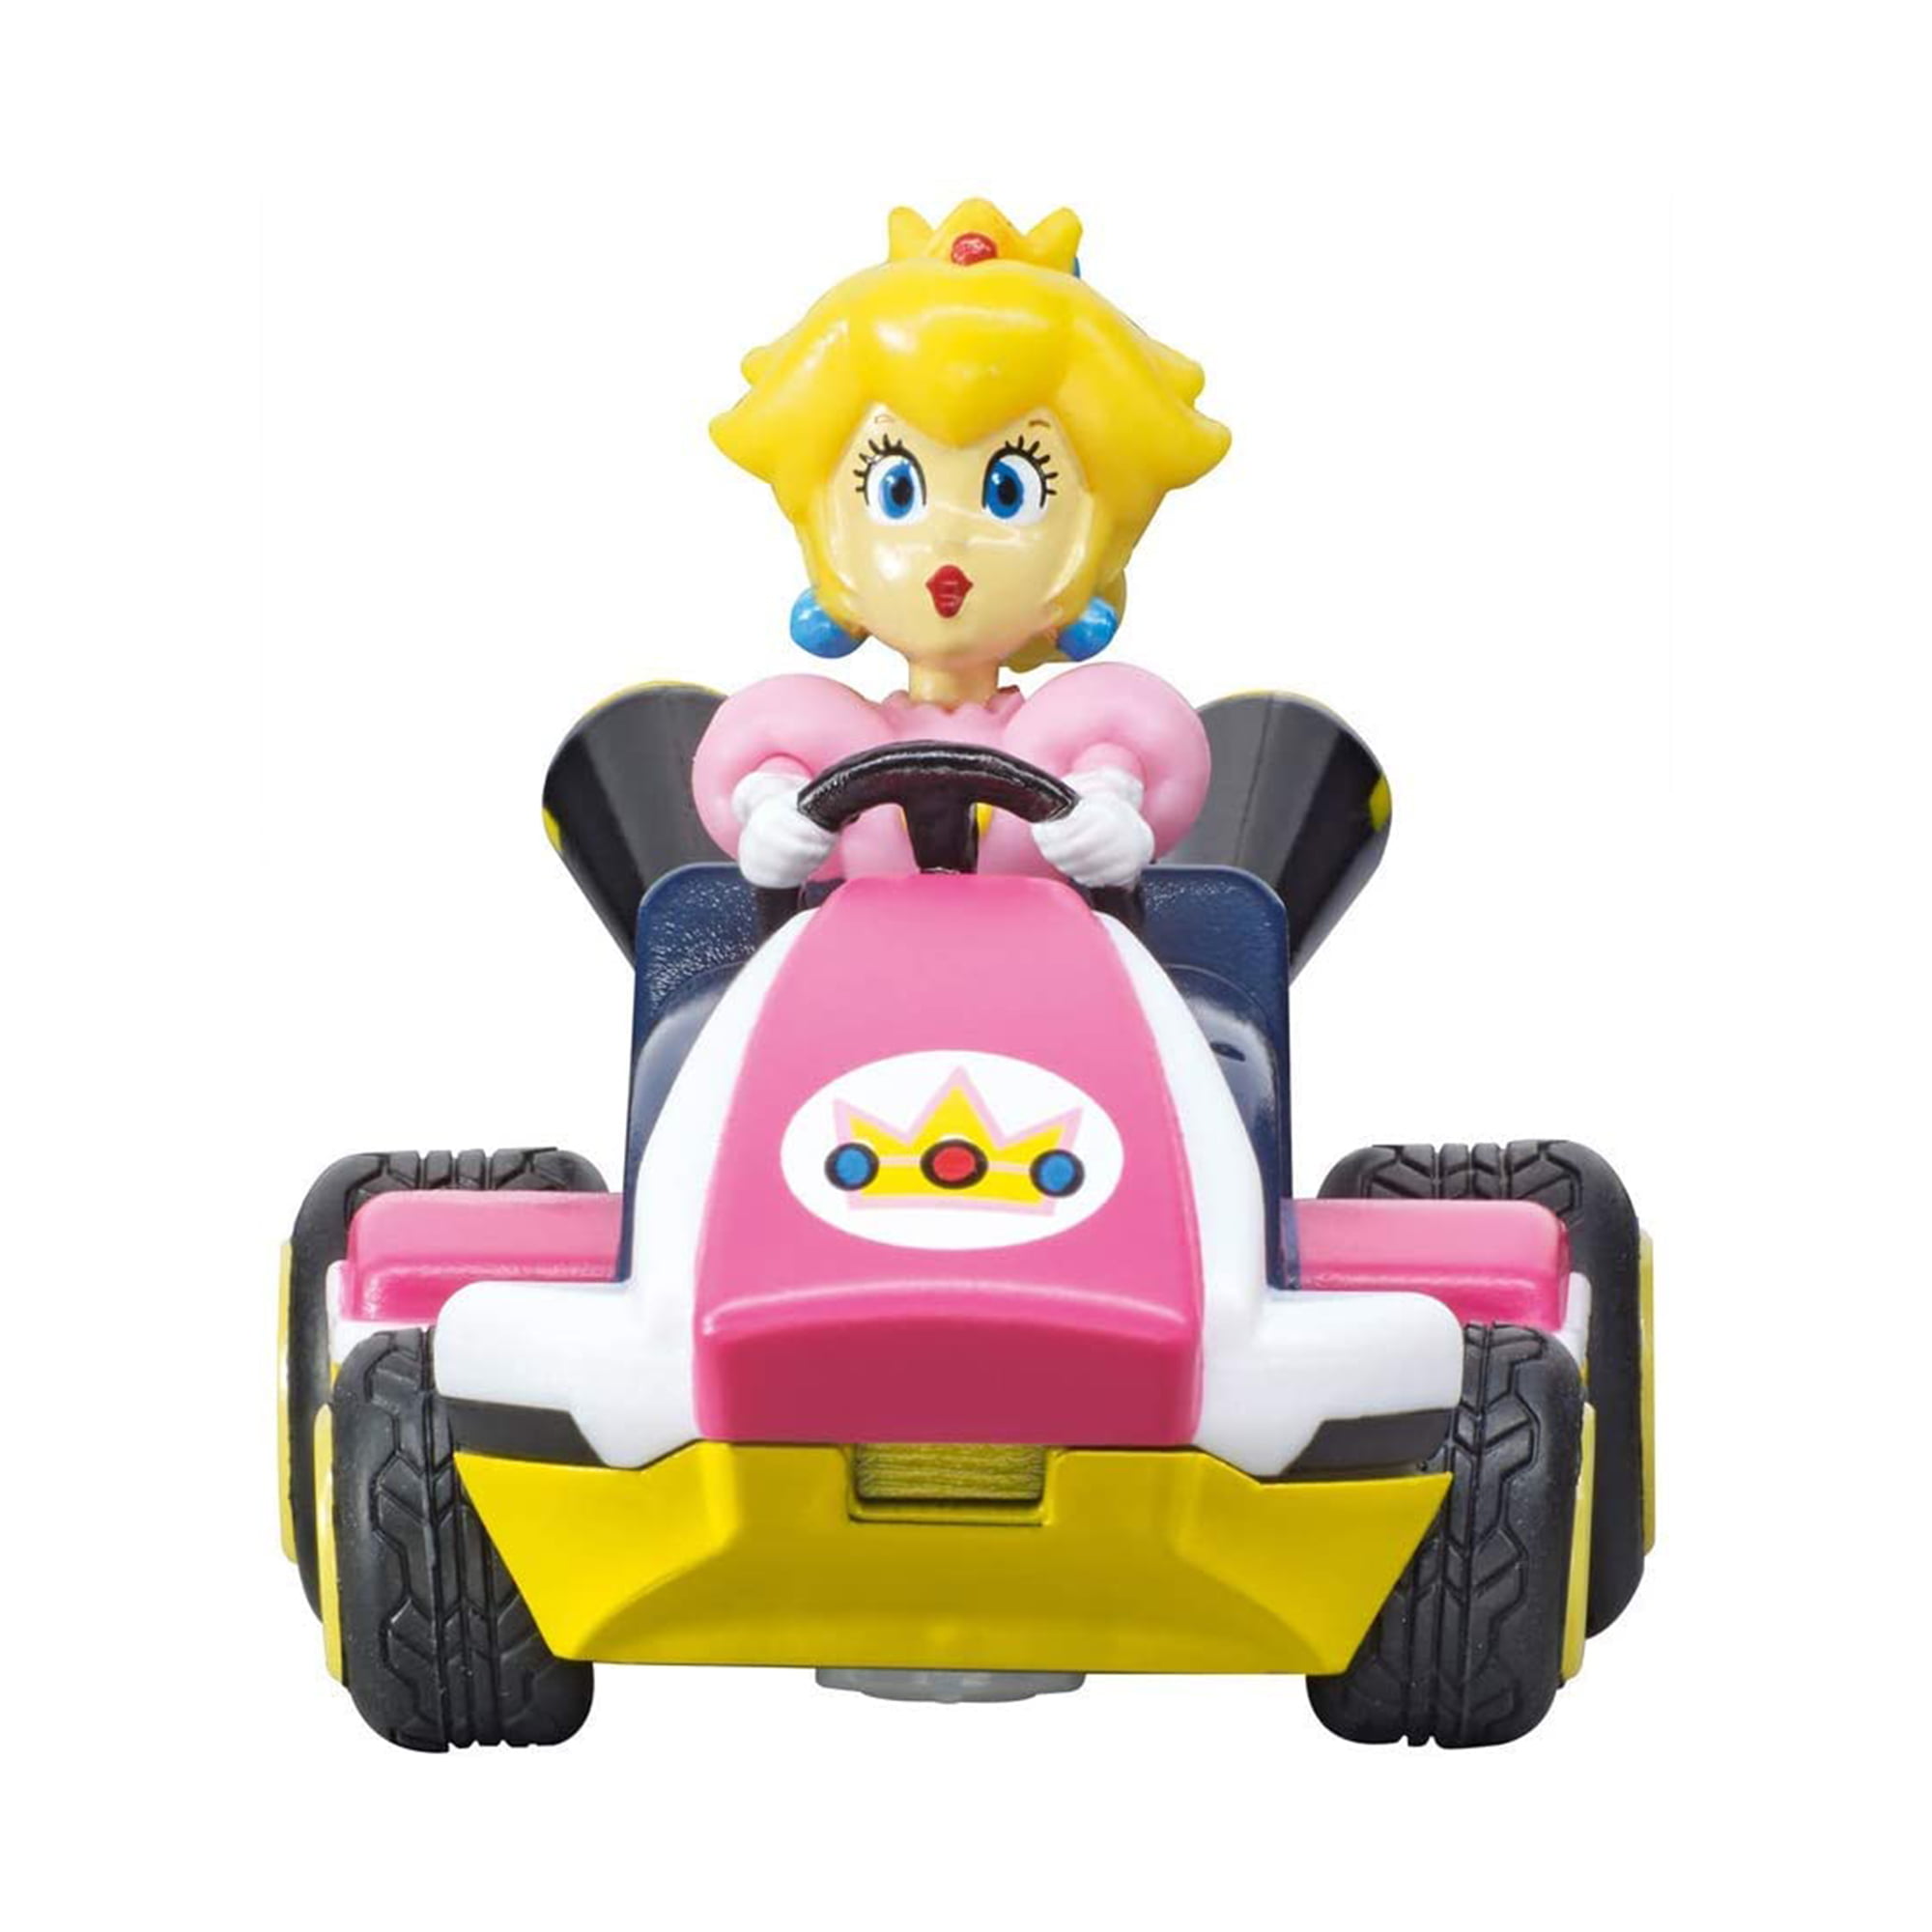 Carrera Officially Licensed Nintendo Mario Kart Remote Control Car, Peach -  